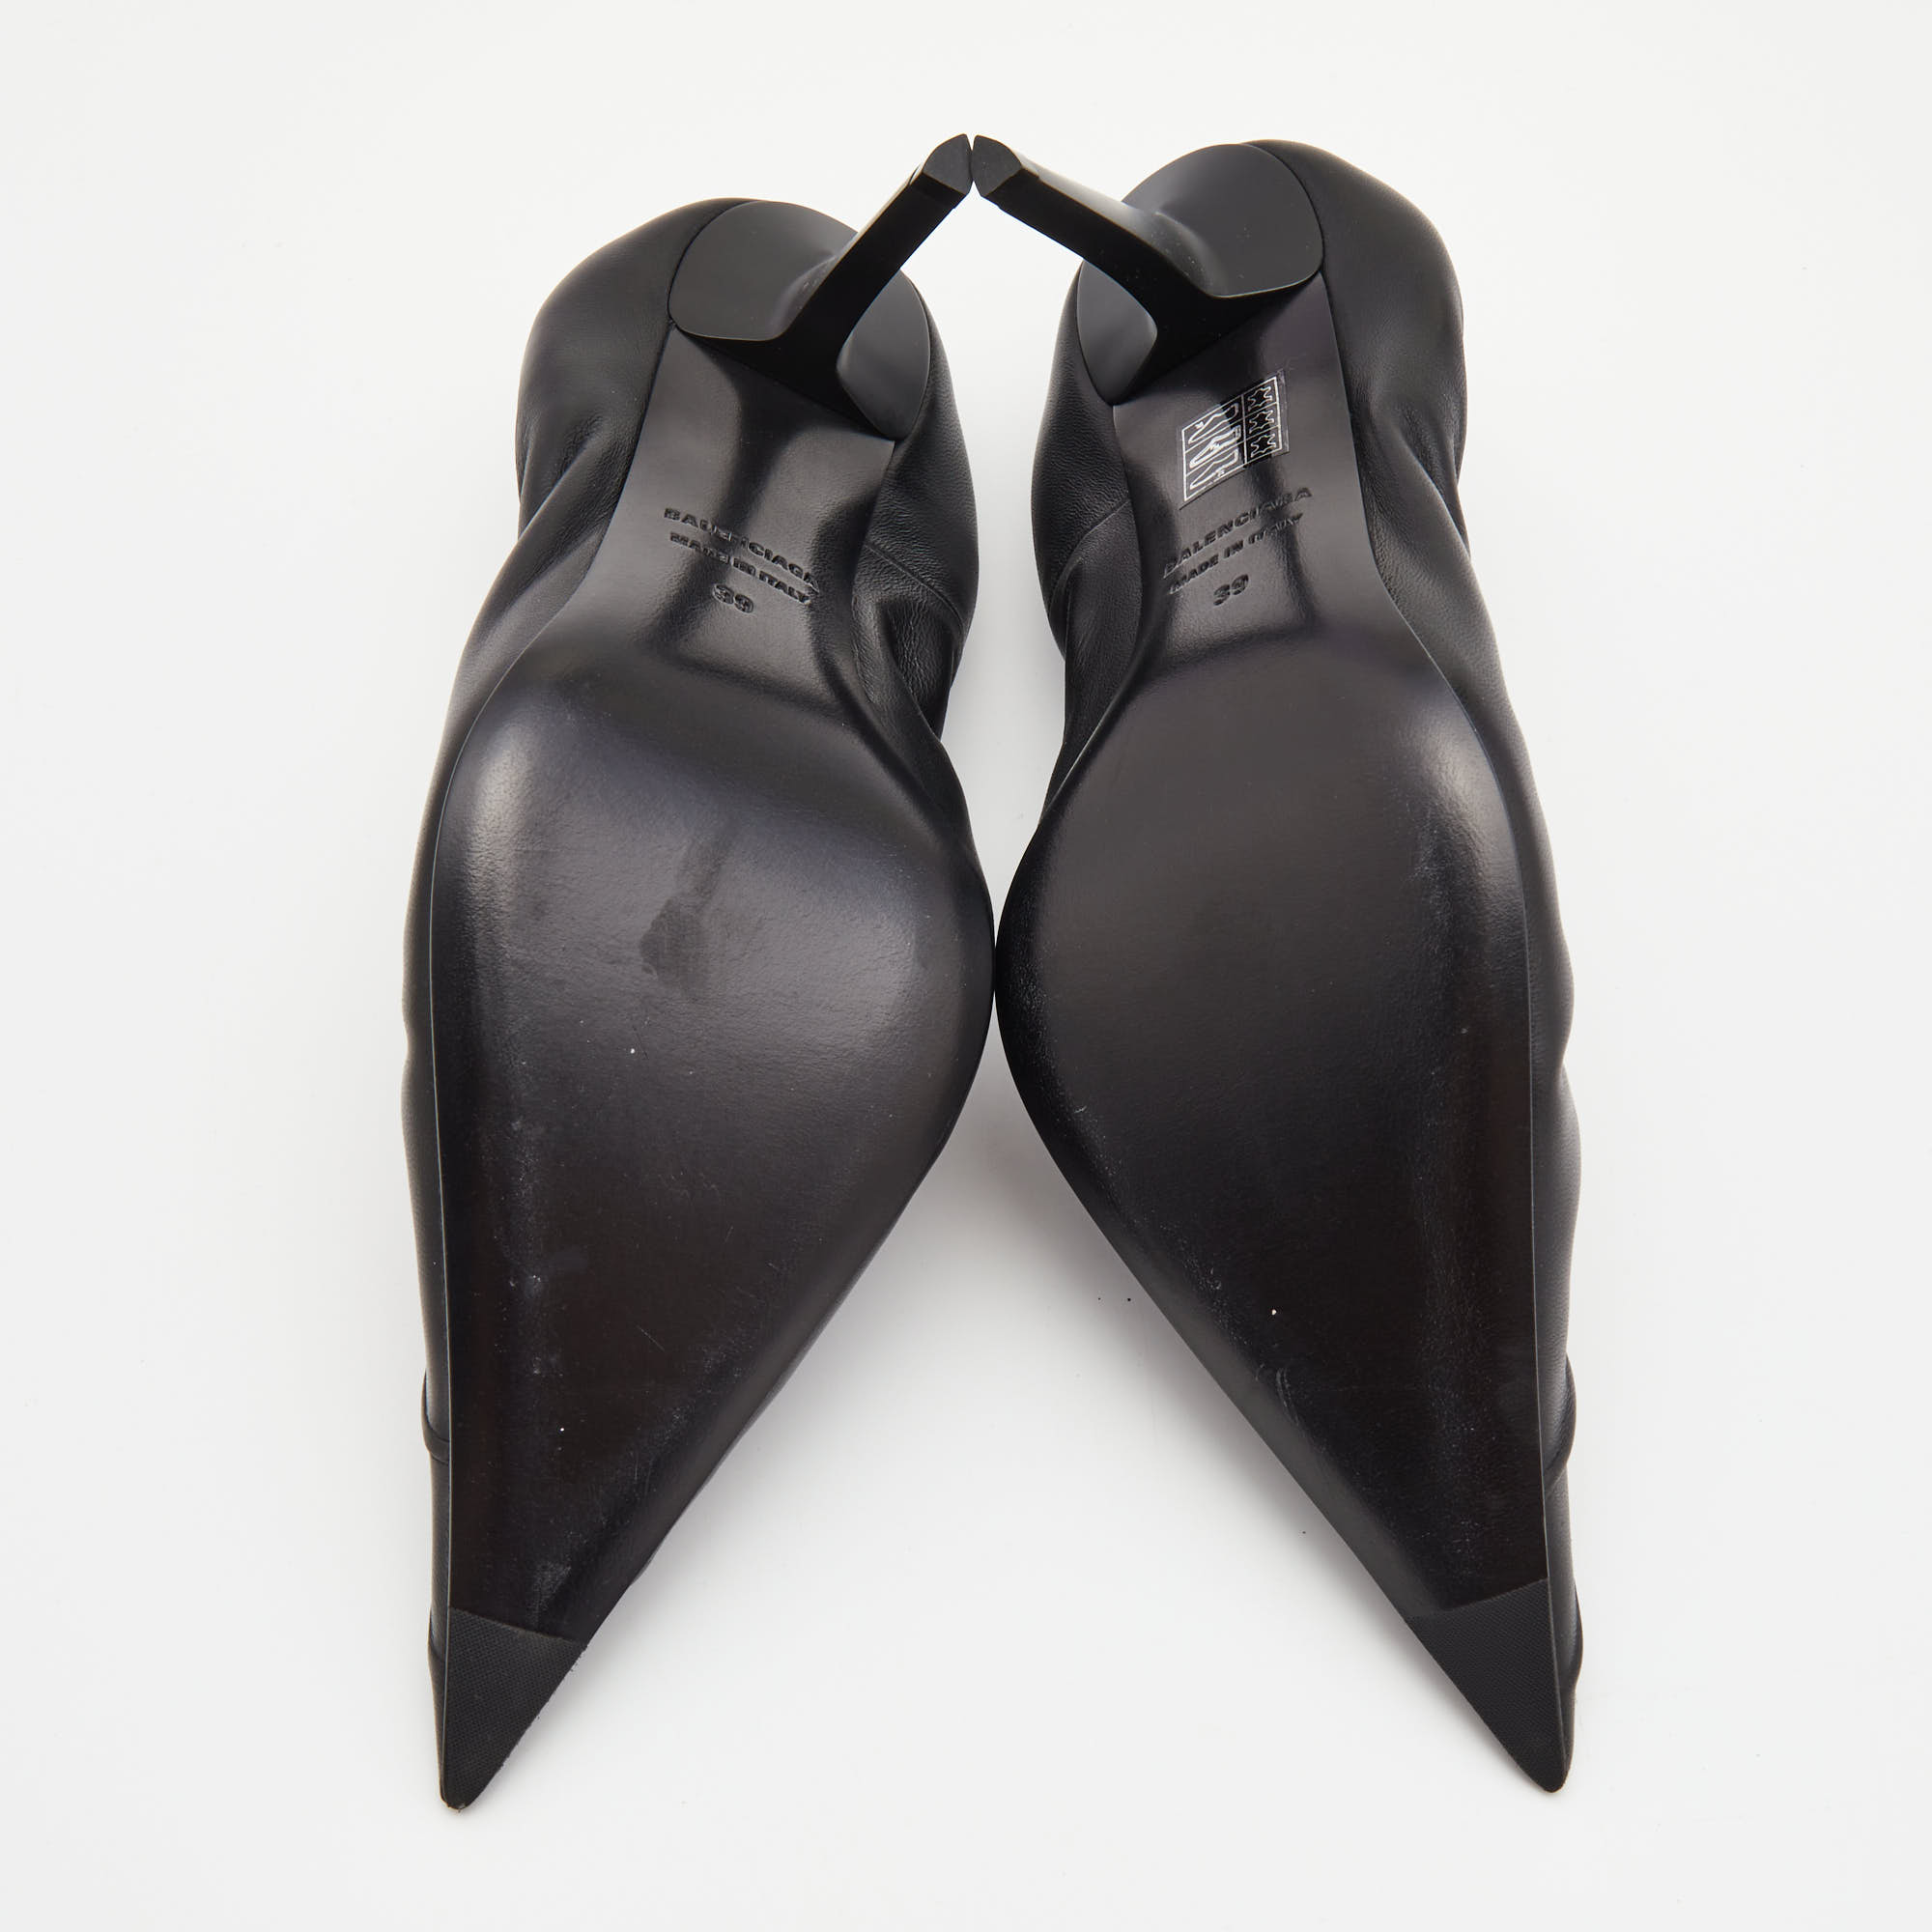 Balenciaga Black Leather Knife Pumps Size 39